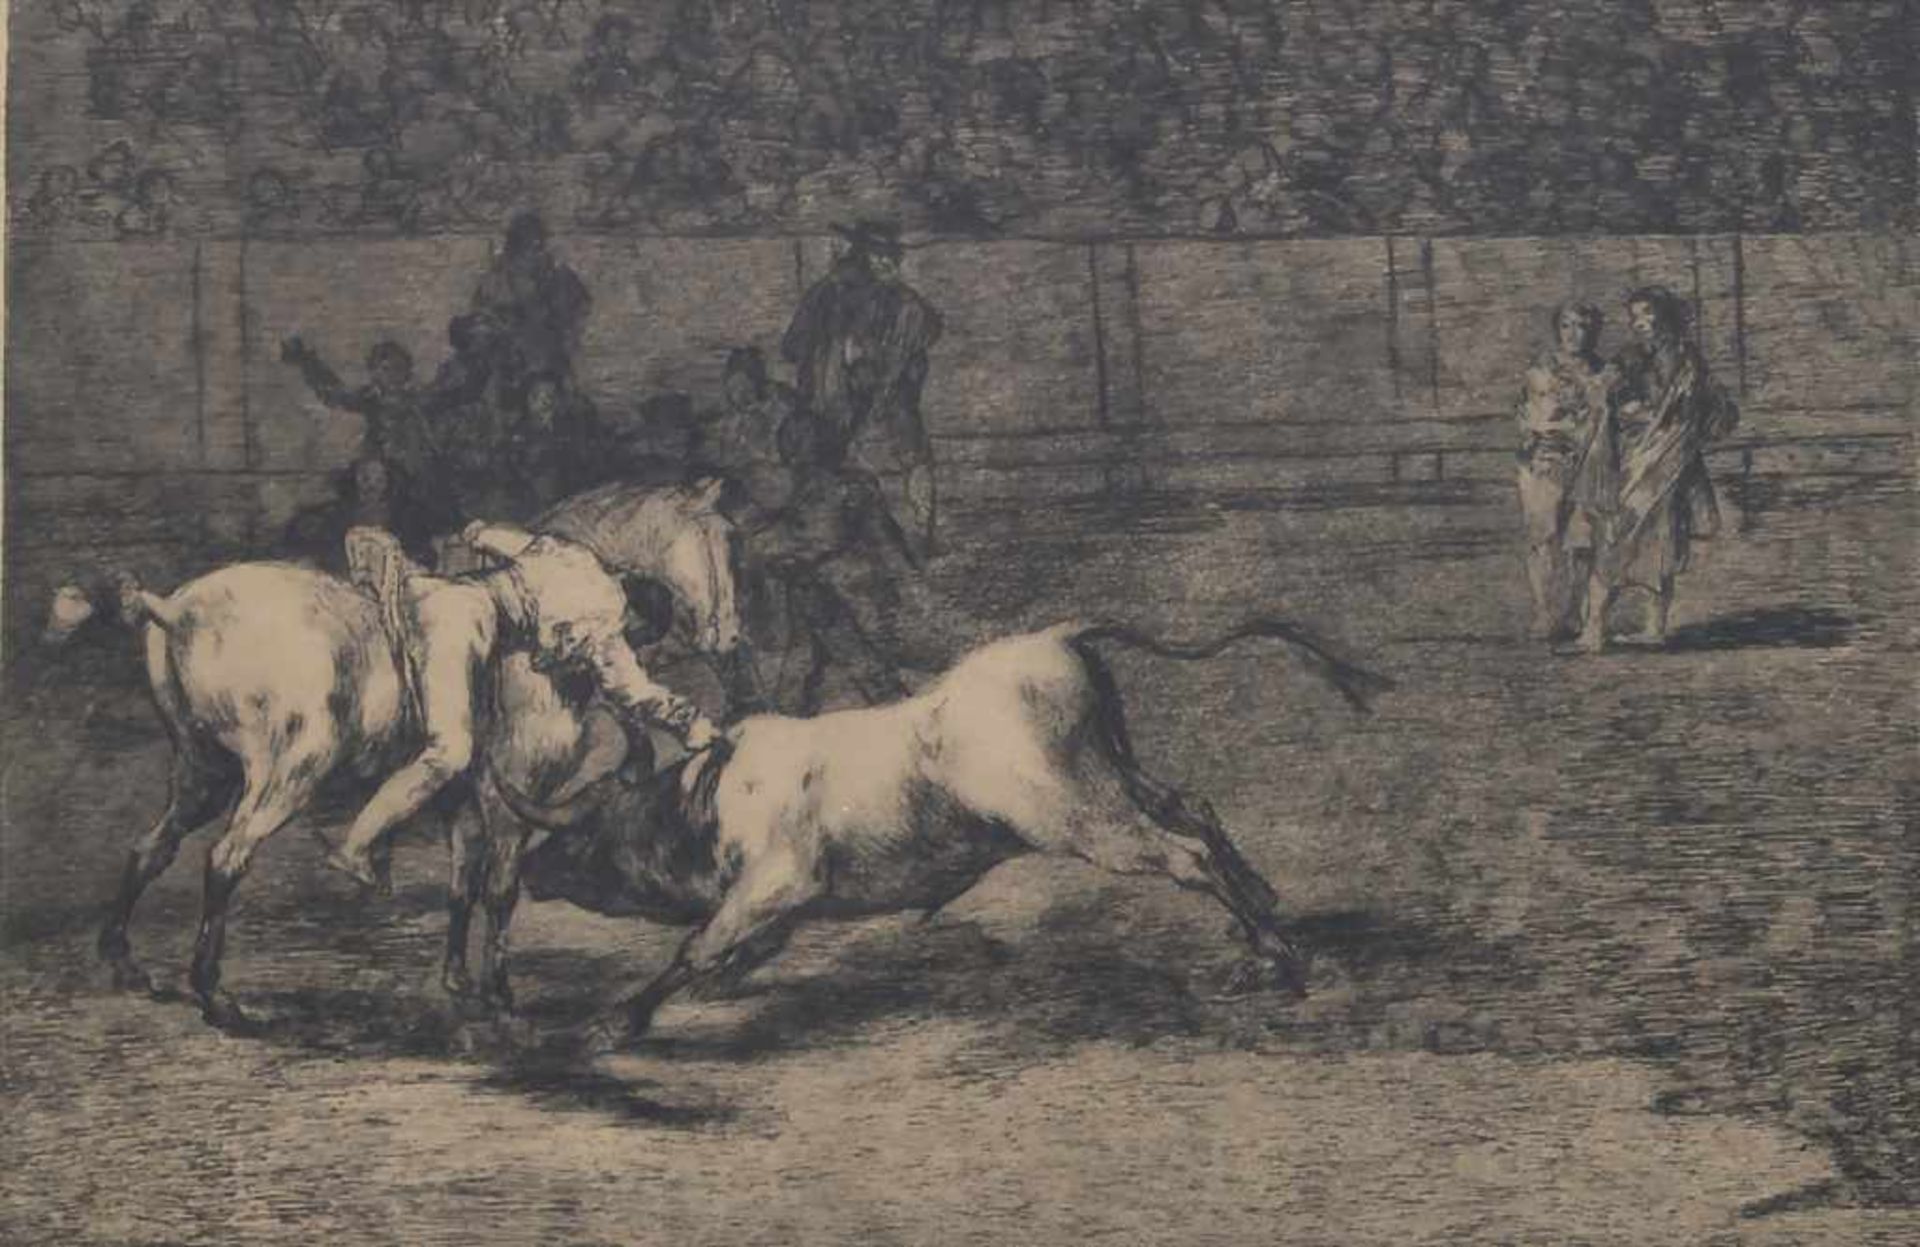 Francisco de Goya (1746-1828), 'Mariano Caballos tötet den Stier' / 'Mariano Caballos killing the